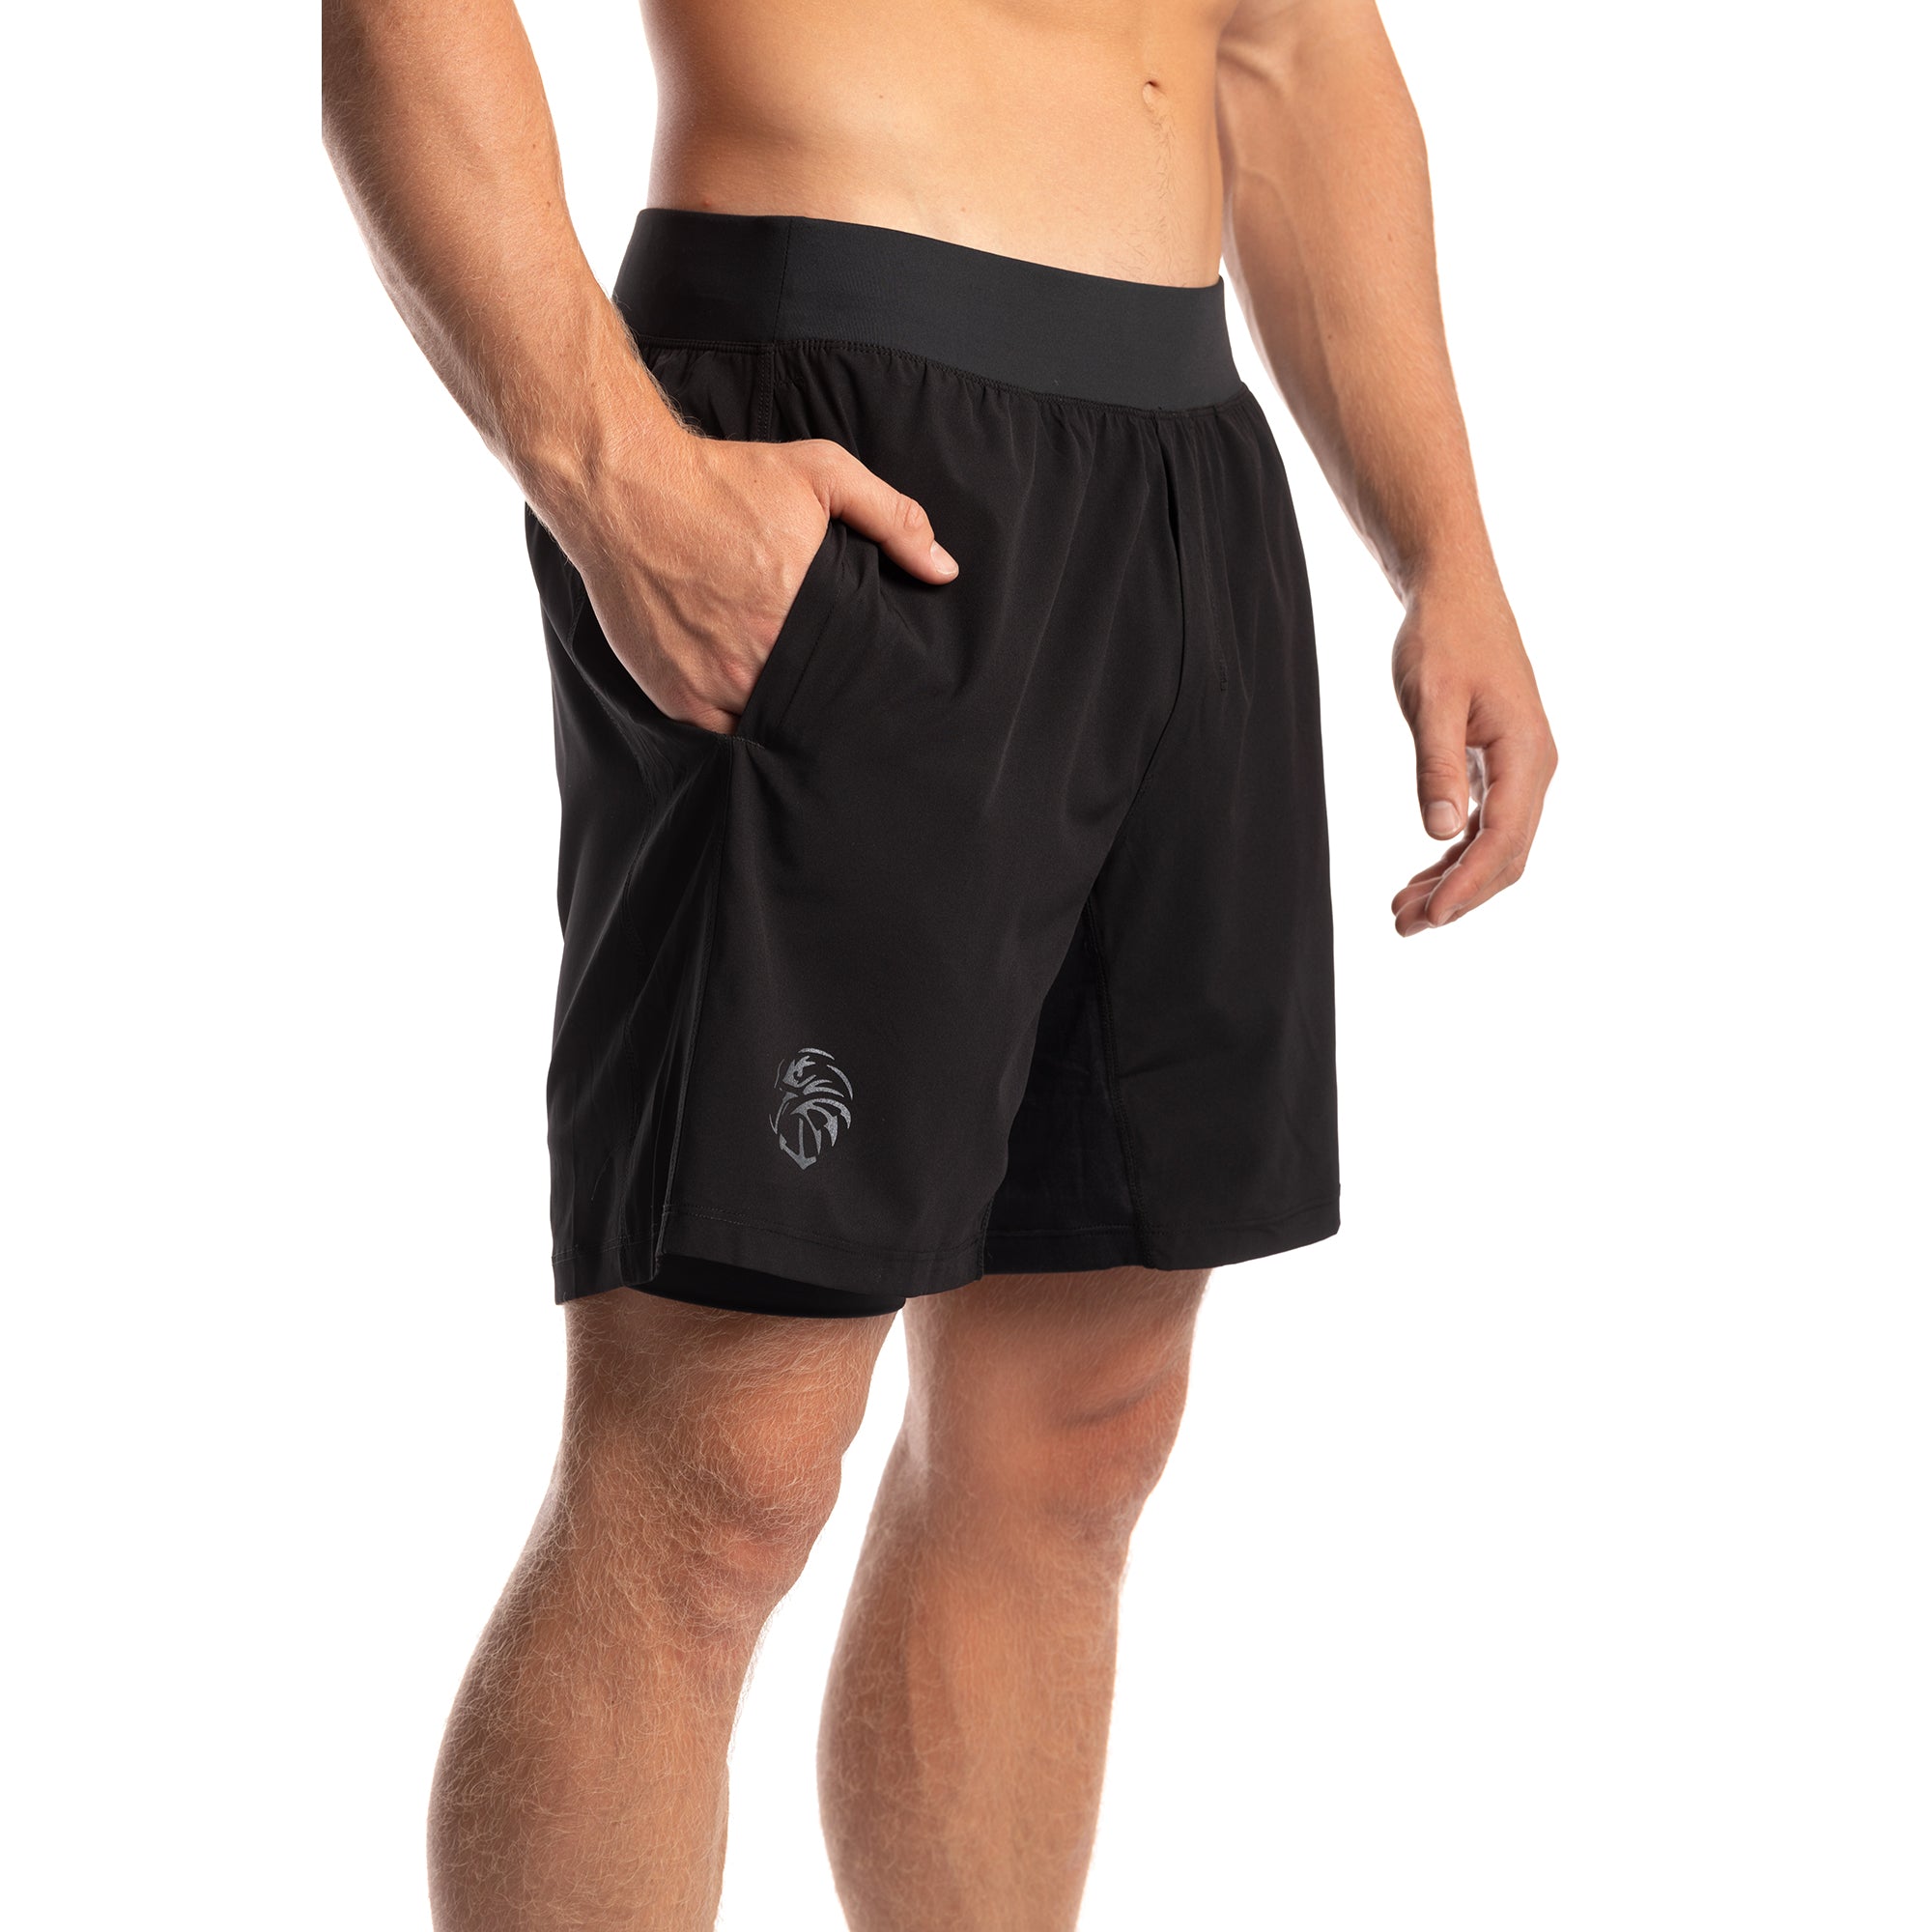 Born Primitive Revival shorts - Athletic apparel